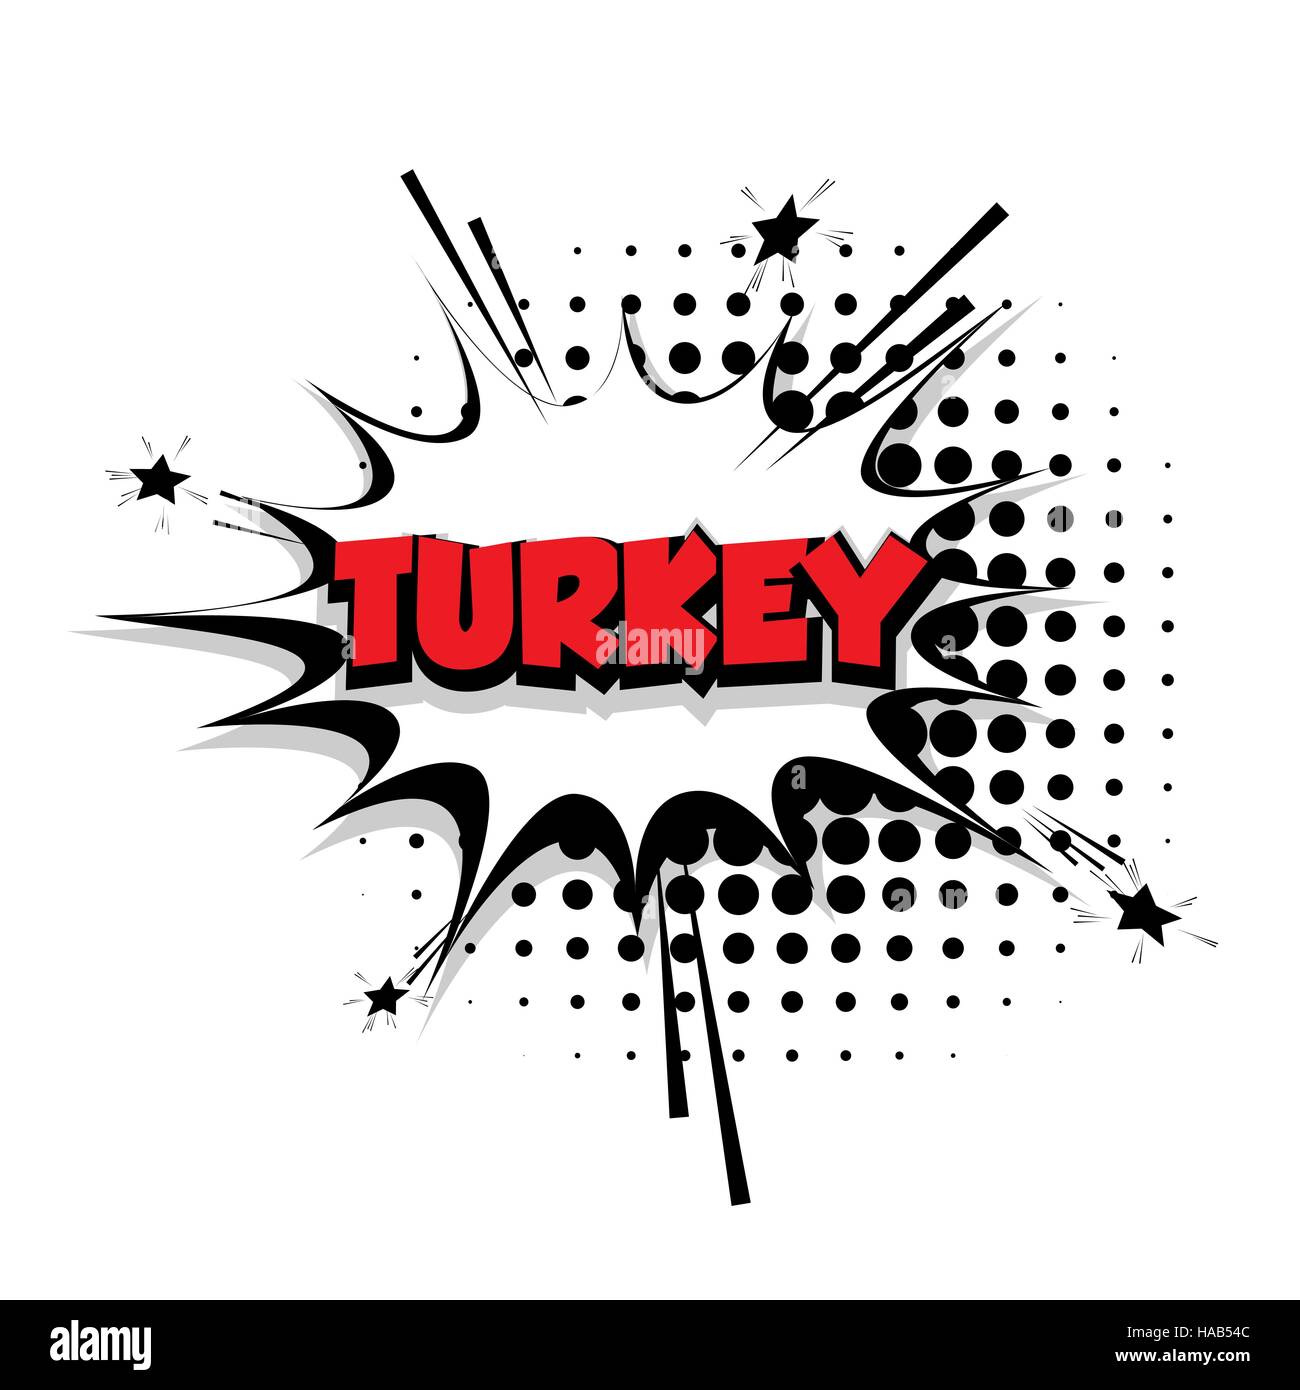 Comic text Turkey sound effects pop art Stock Vector